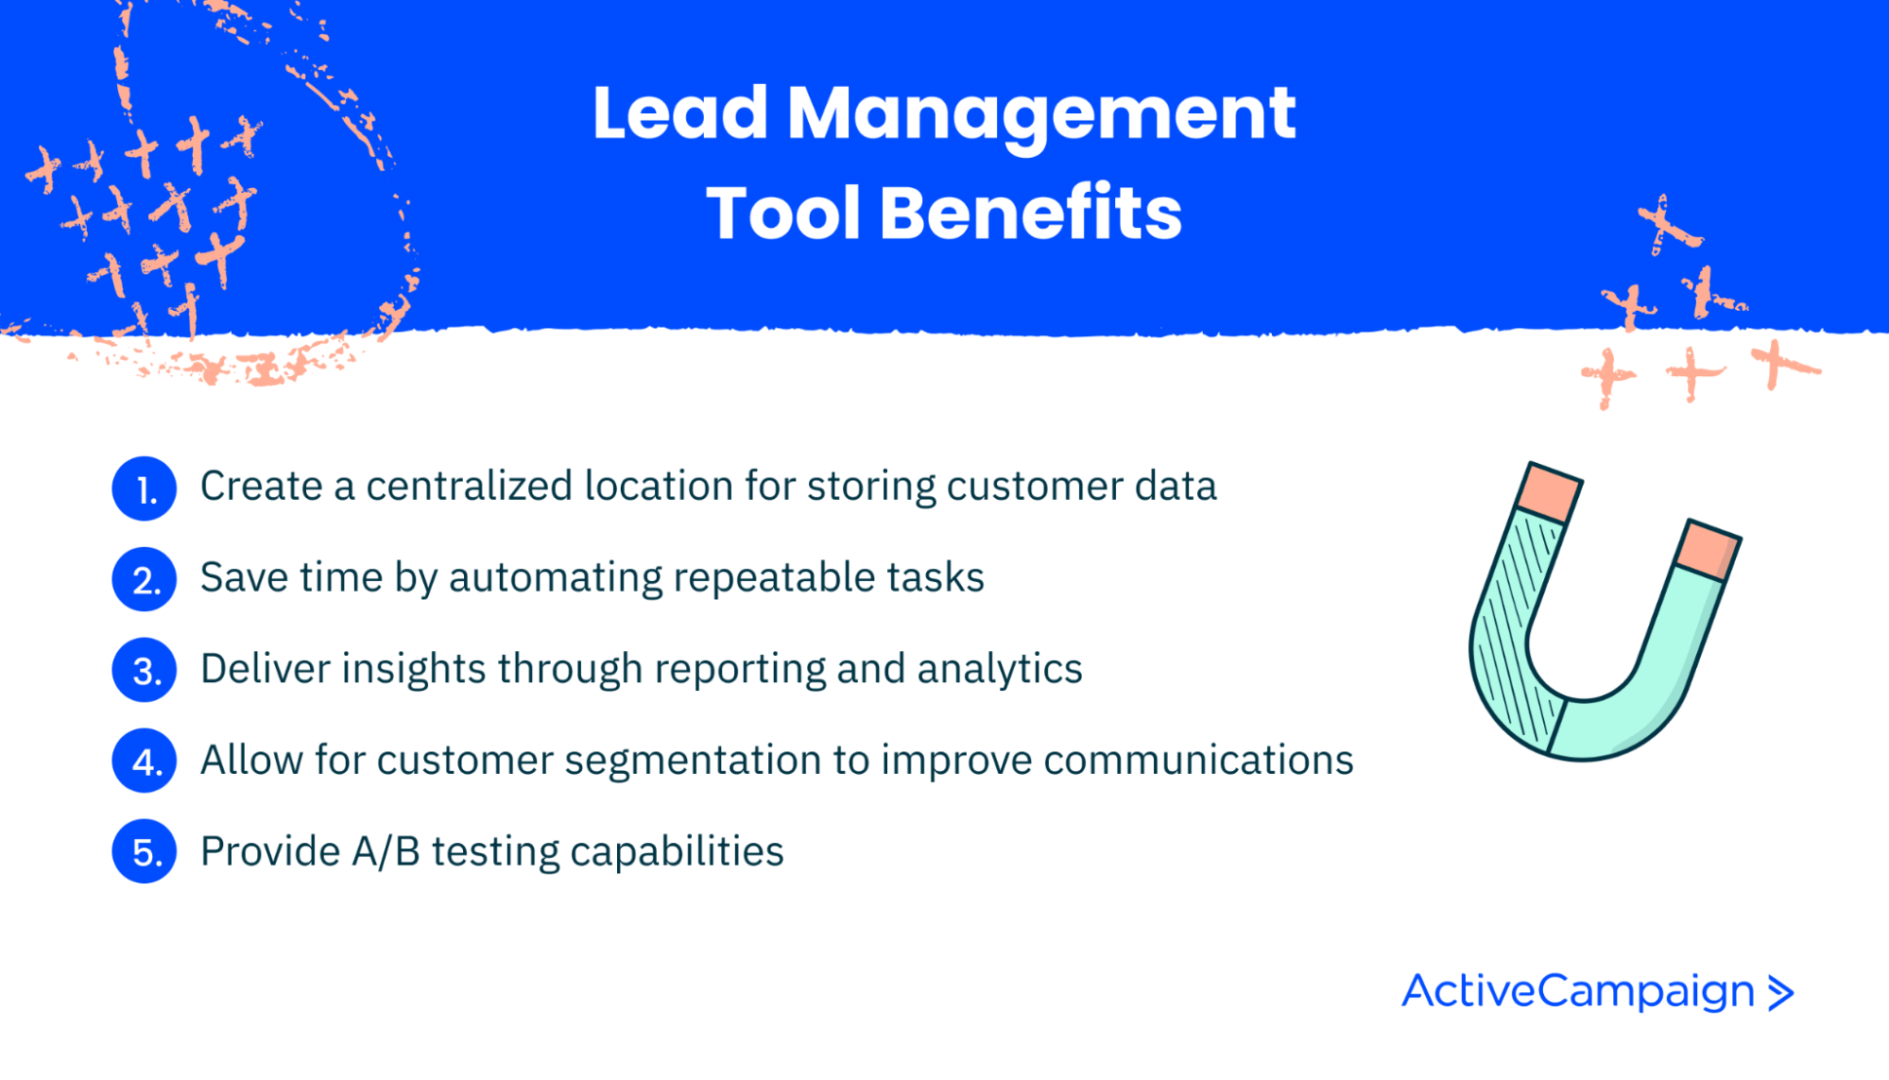 Lead Management Tool Benefits